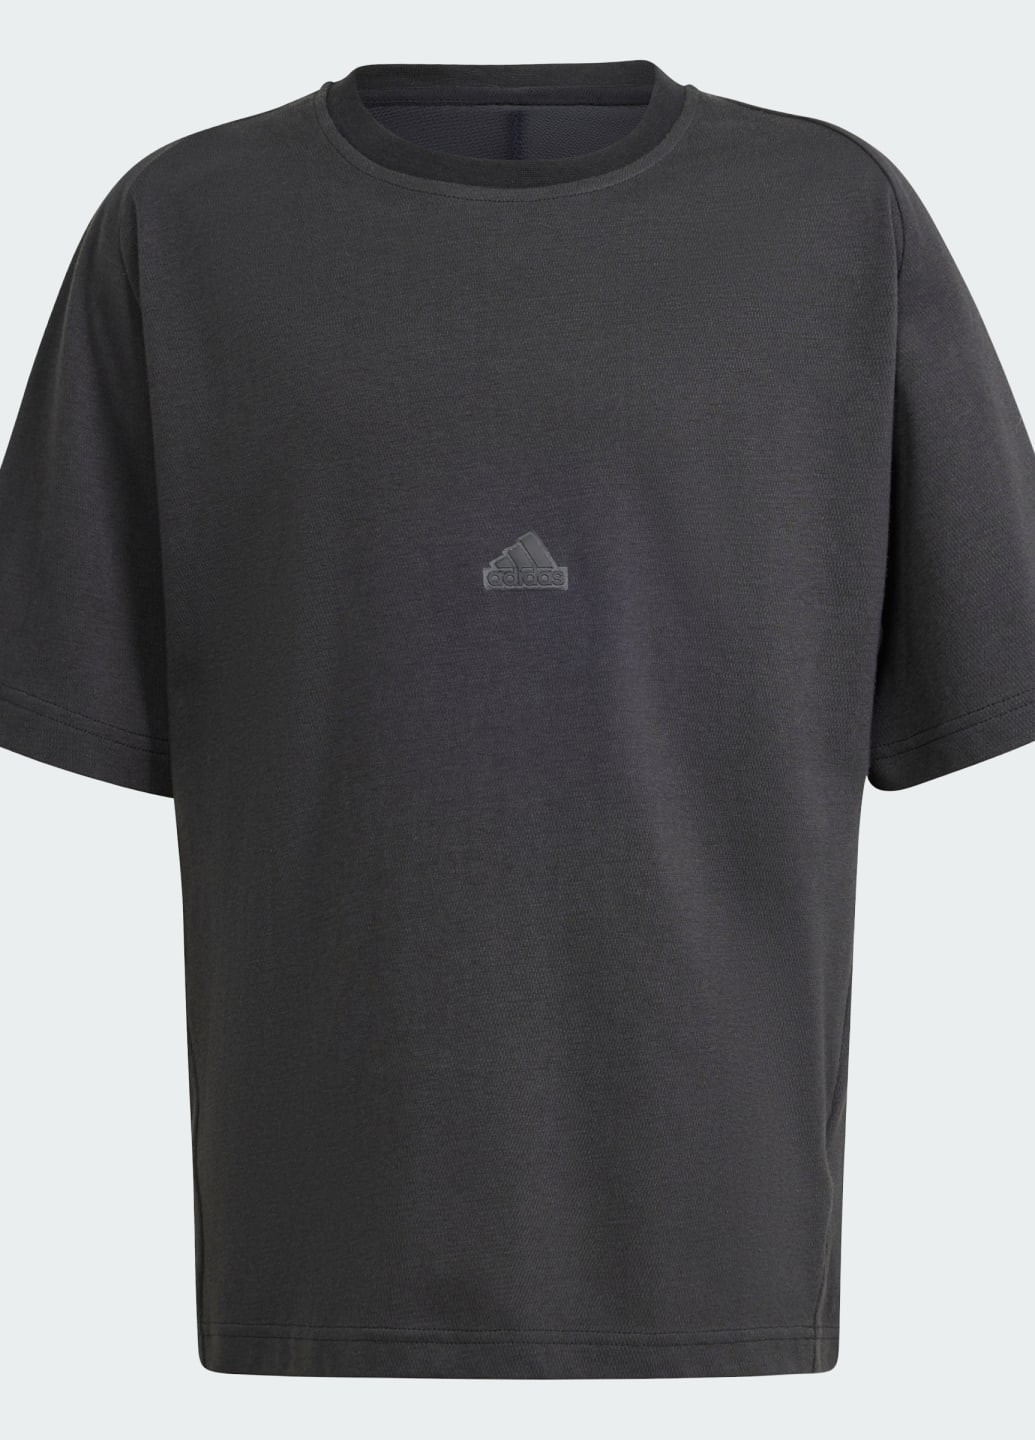 Черная демисезонная футболка z.n.e. kids adidas